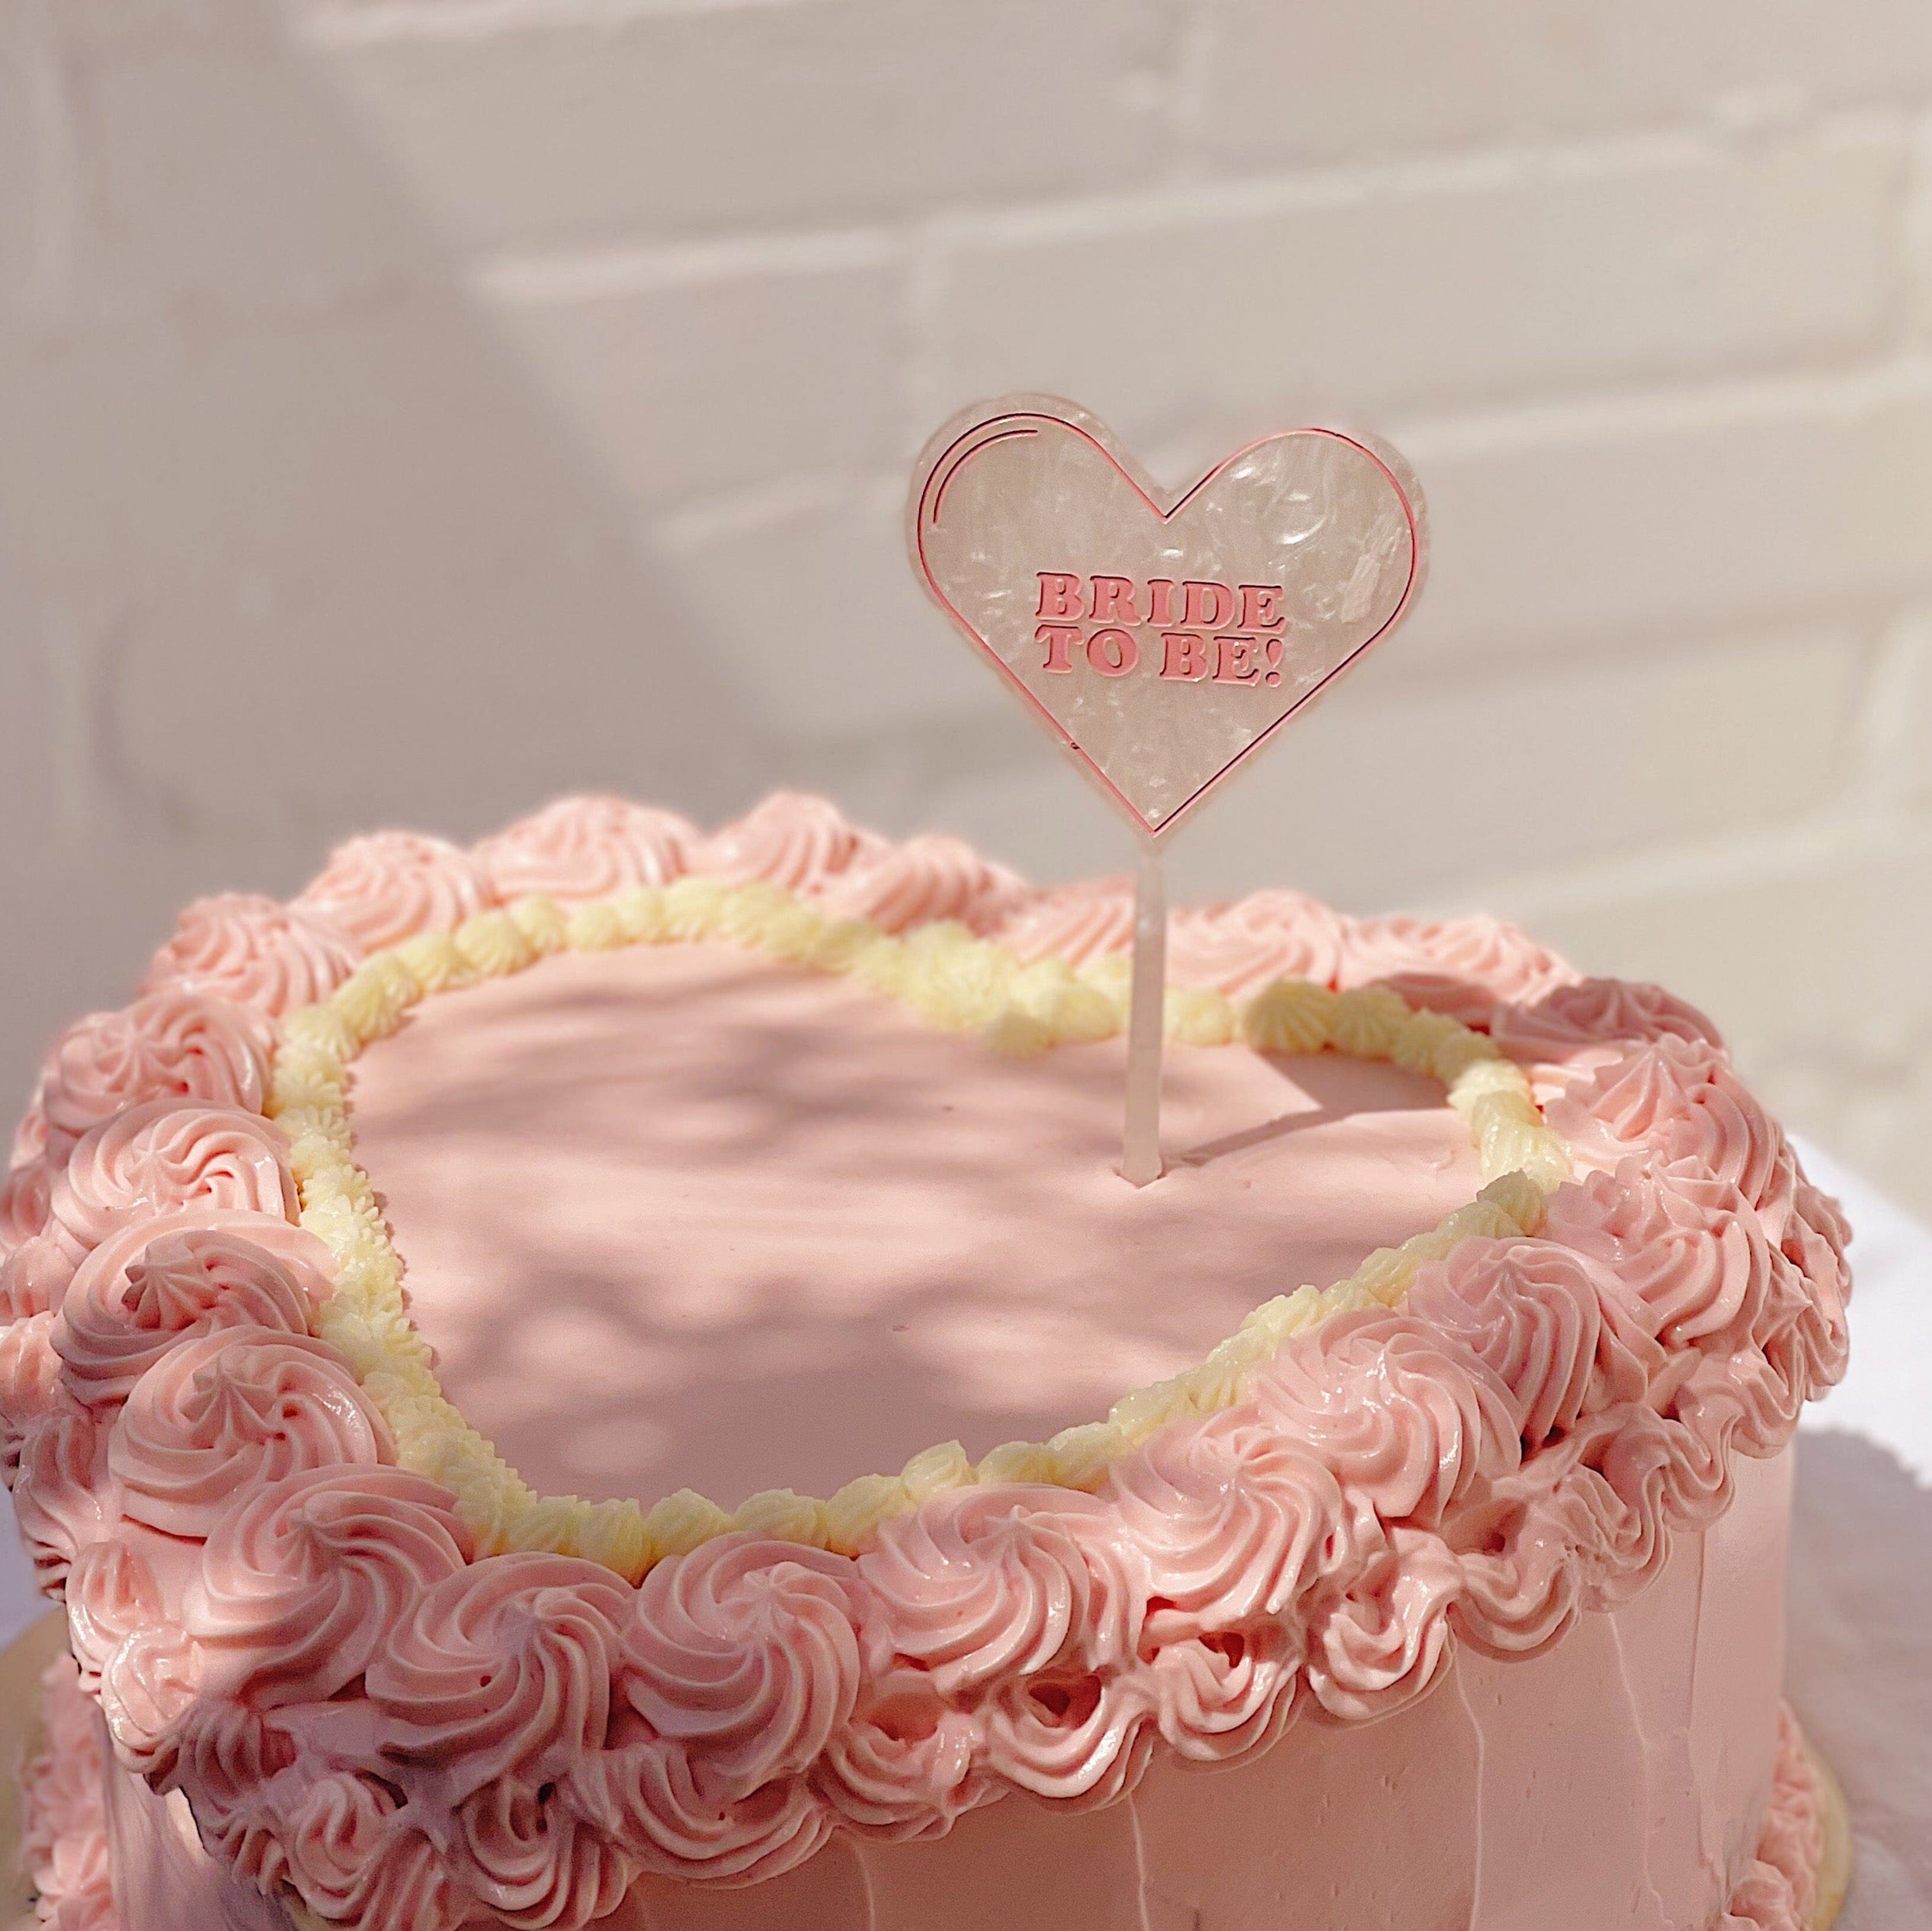 Cake Topper "Bride to be" Cake Topper hello love 